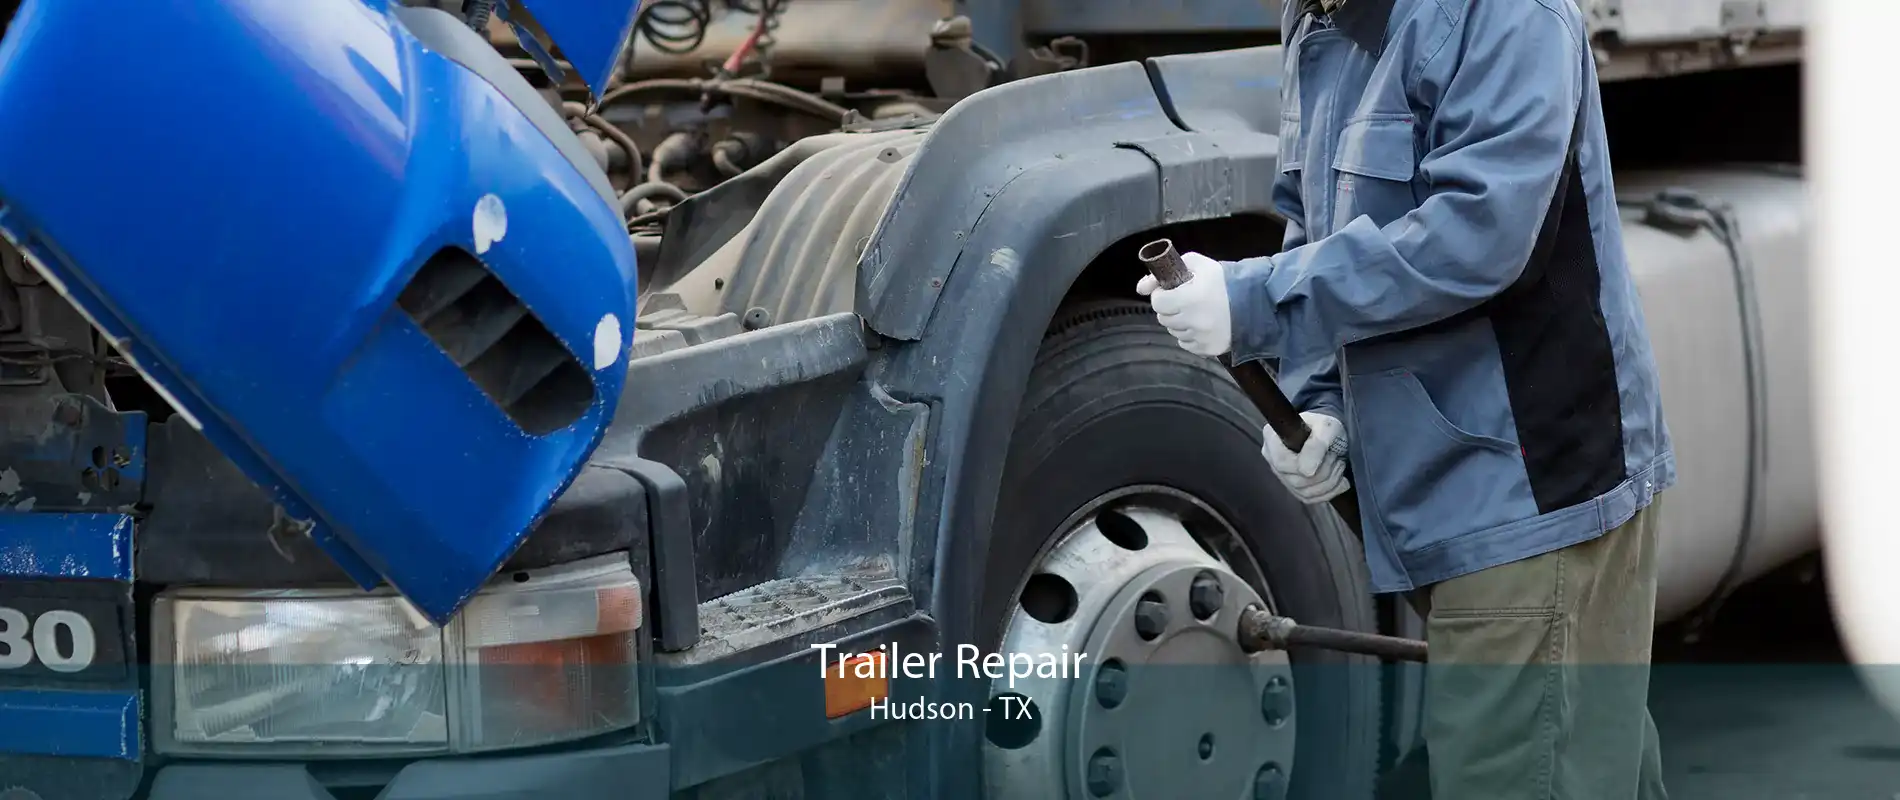 Trailer Repair Hudson - TX